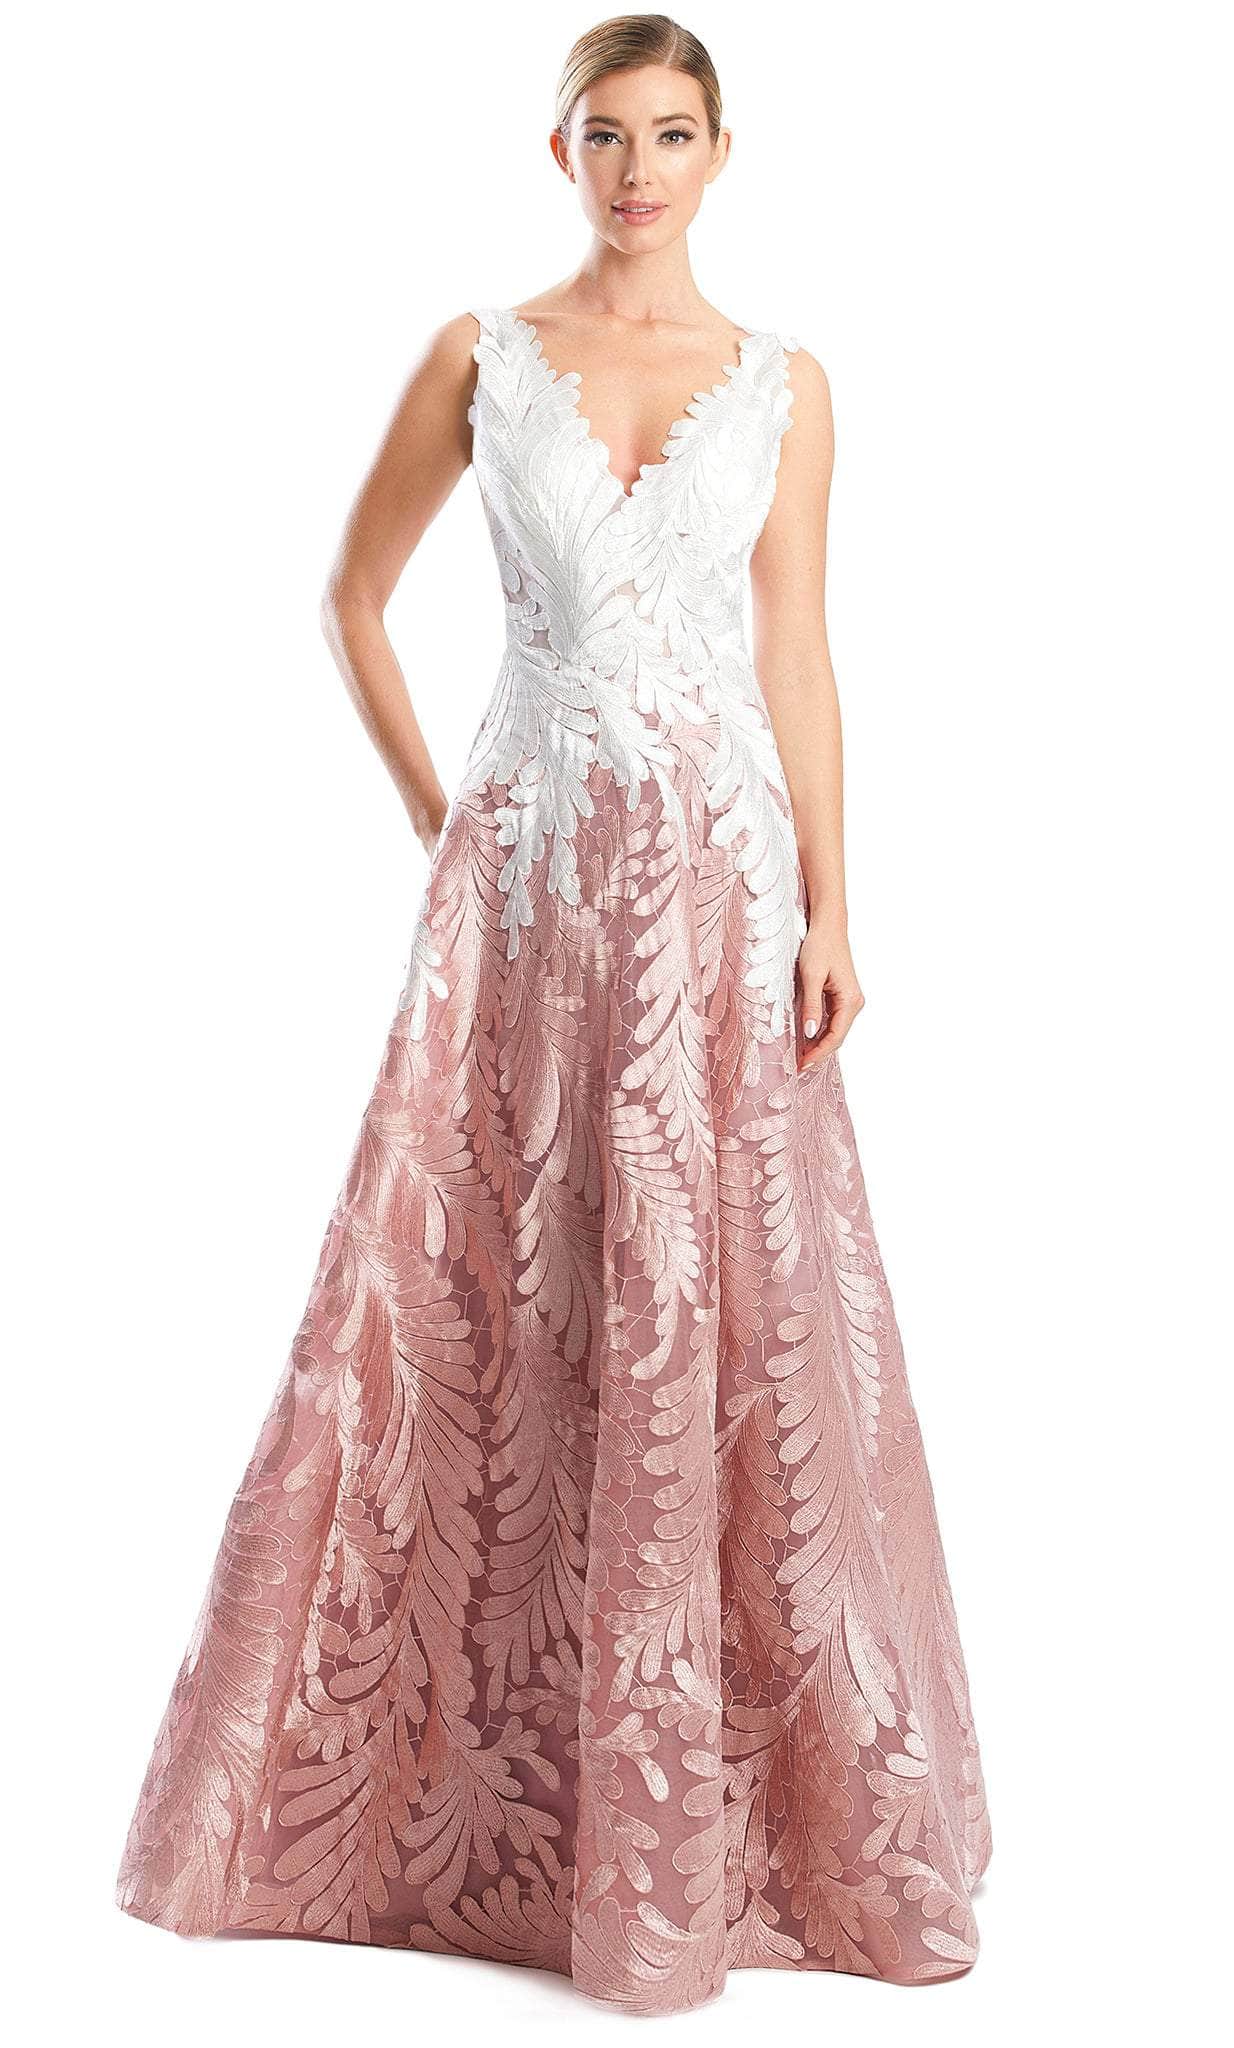 Alexander by Daymor 1750S23 - Sleeveless Lace Dress Evening Dresses 00 / Quartz/White